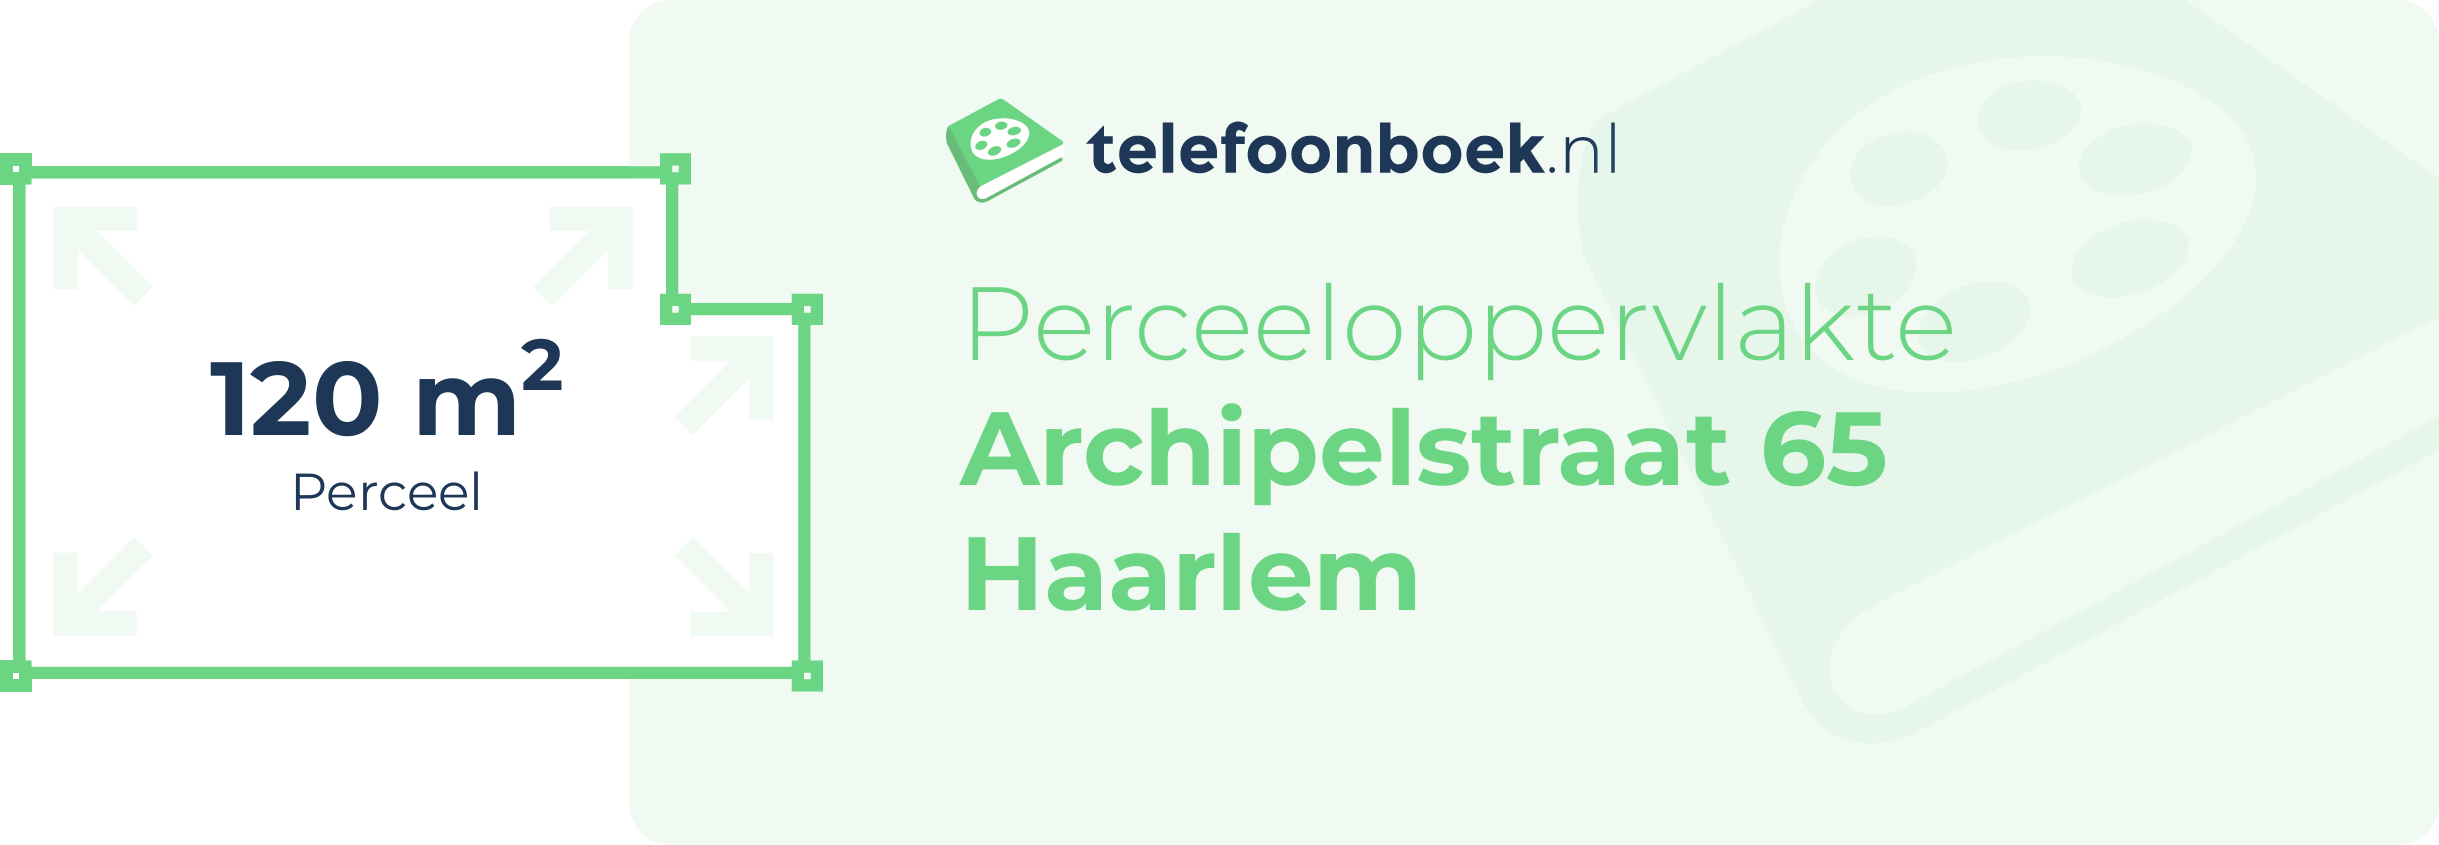 Perceeloppervlakte Archipelstraat 65 Haarlem